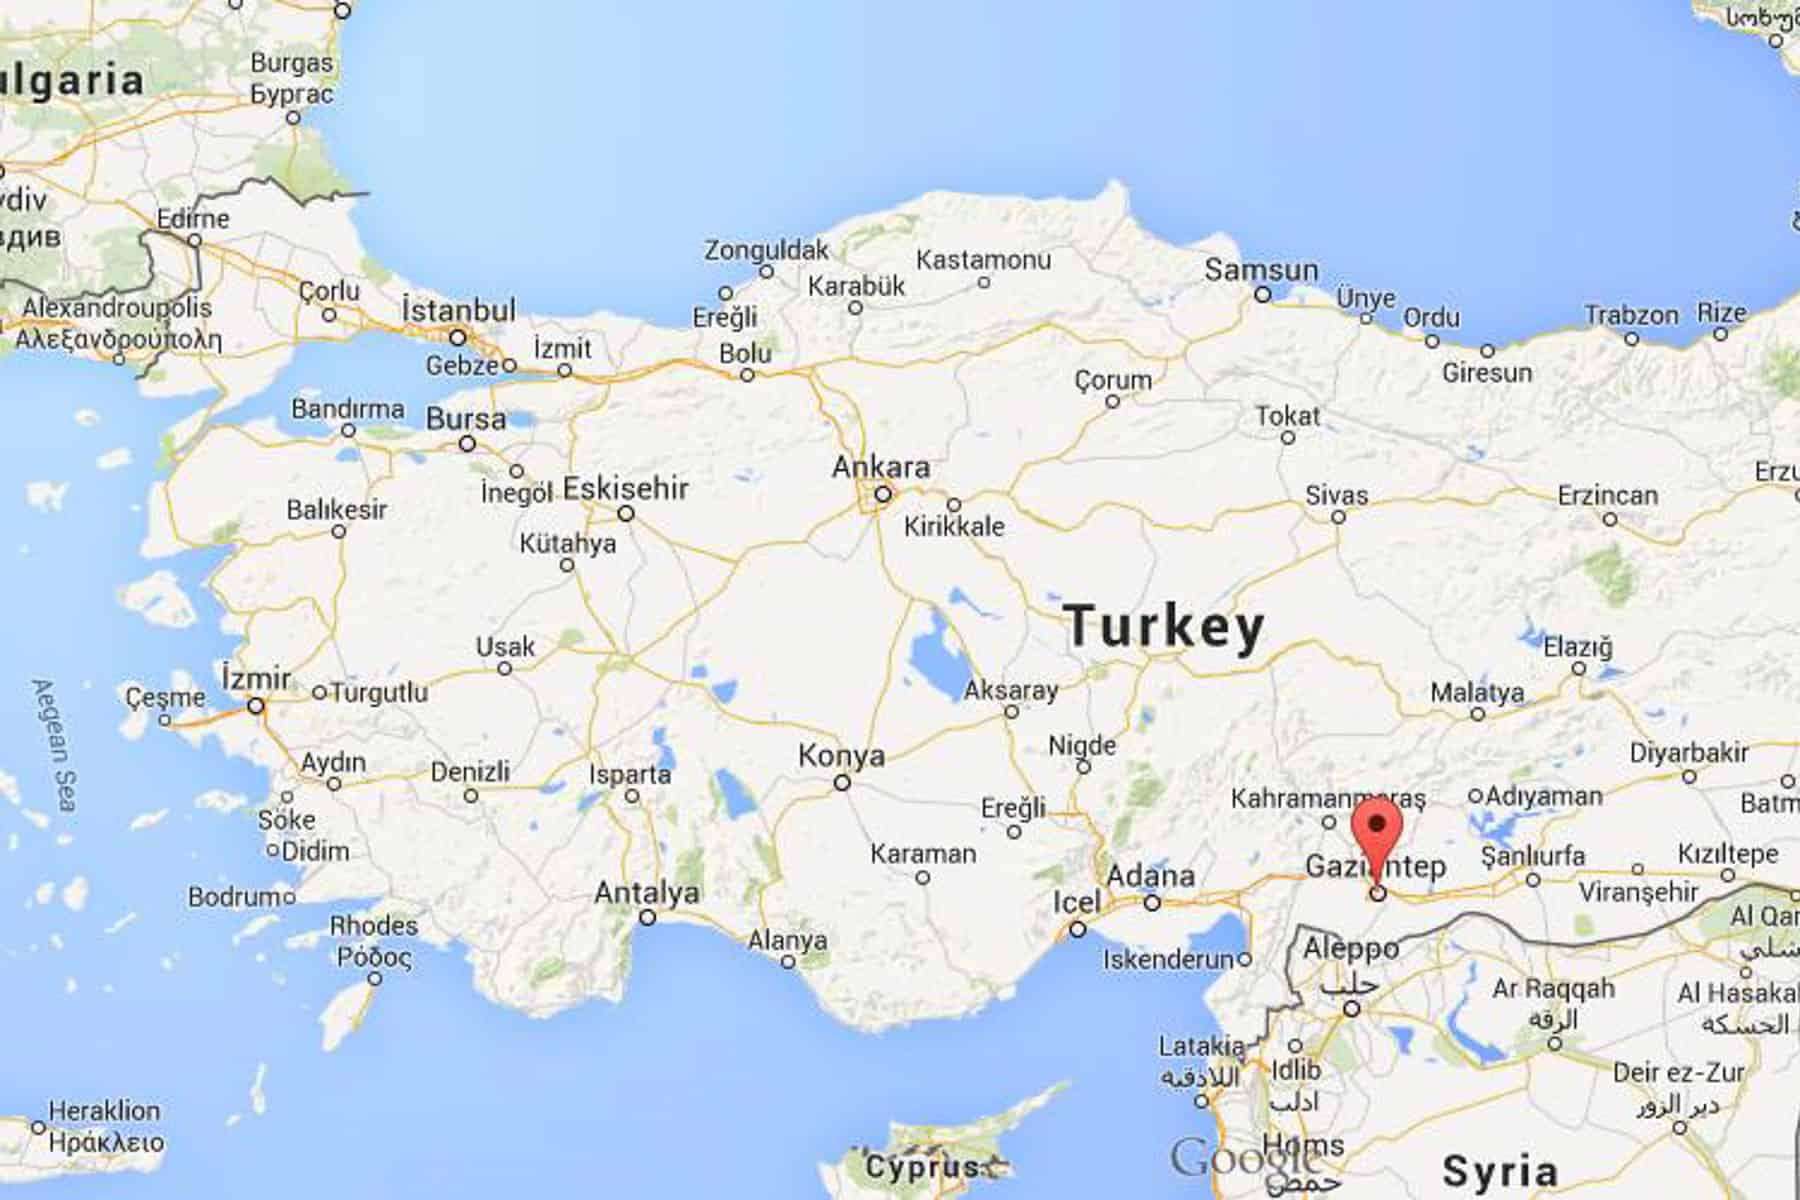 Gaziantep map of Turkey